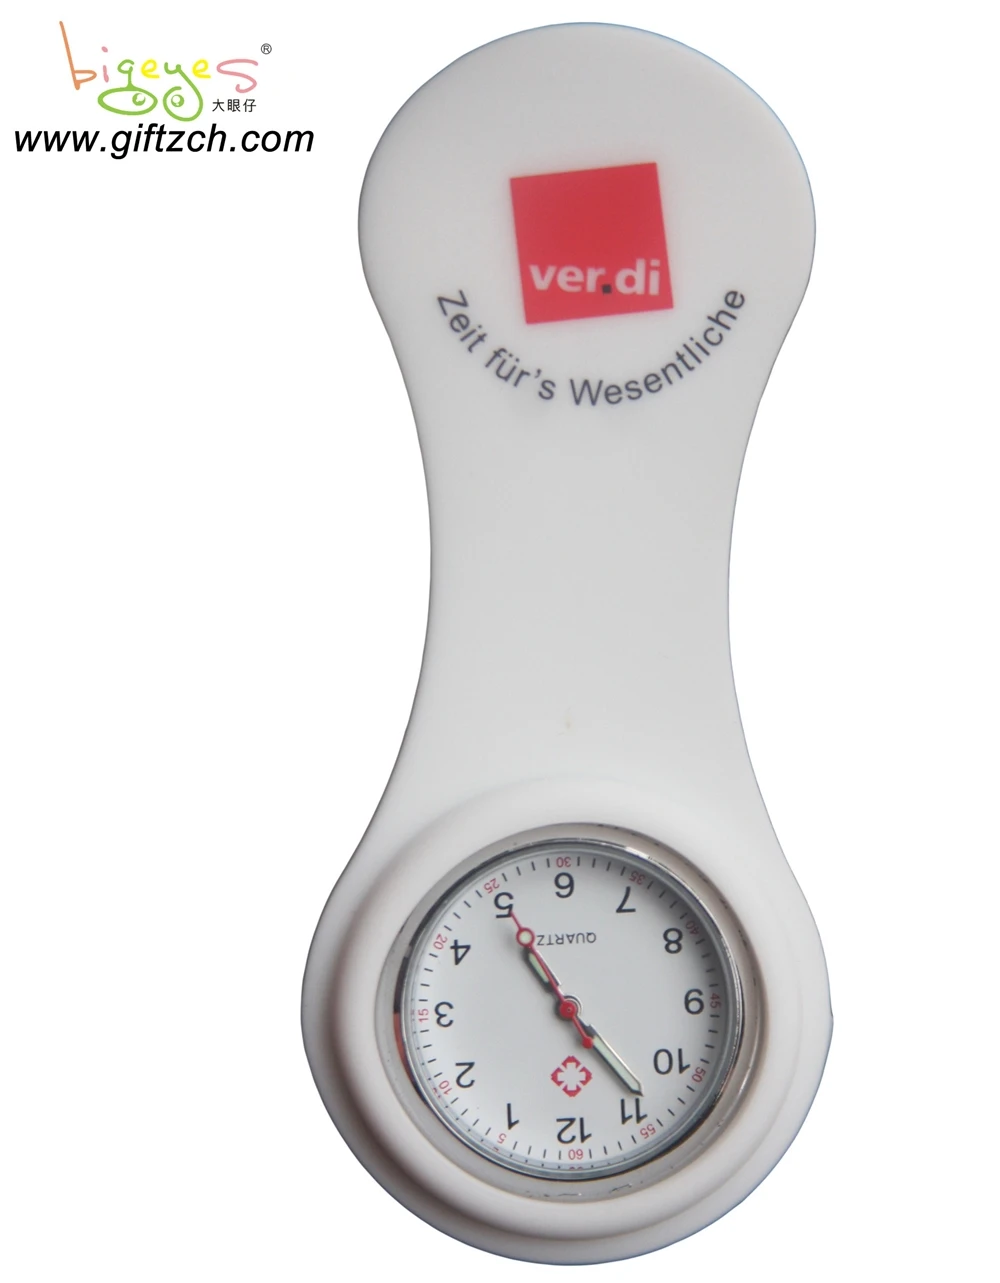 
Womens quartz brooch pocket nursing watch, Best medical watch for nurses students doctors reloj de enfermera de silicona 